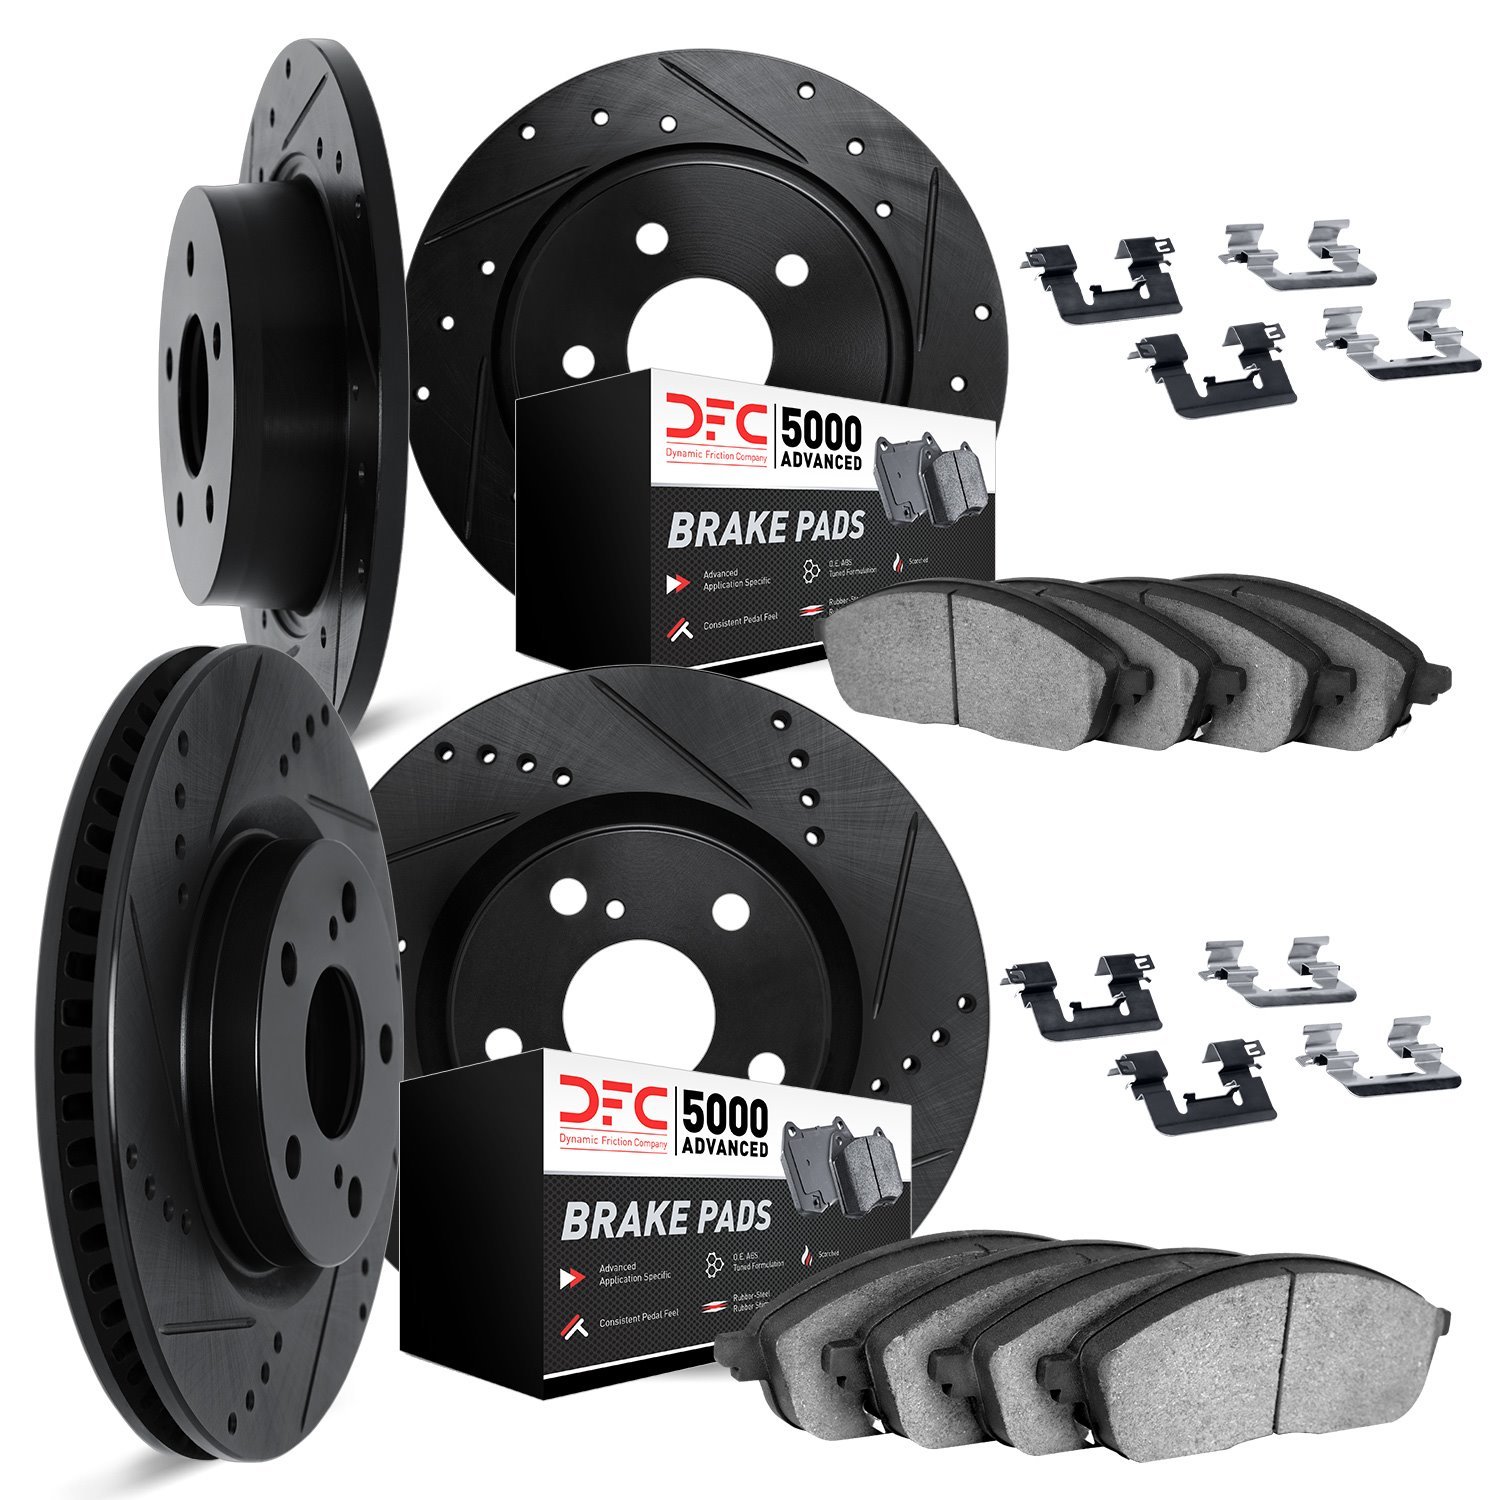 8514-03078 Drilled/Slotted Brake Rotors w/5000 Advanced Brake Pads Kit & Hardware [Black], Fits Select Kia/Hyundai/Genesis, Posi